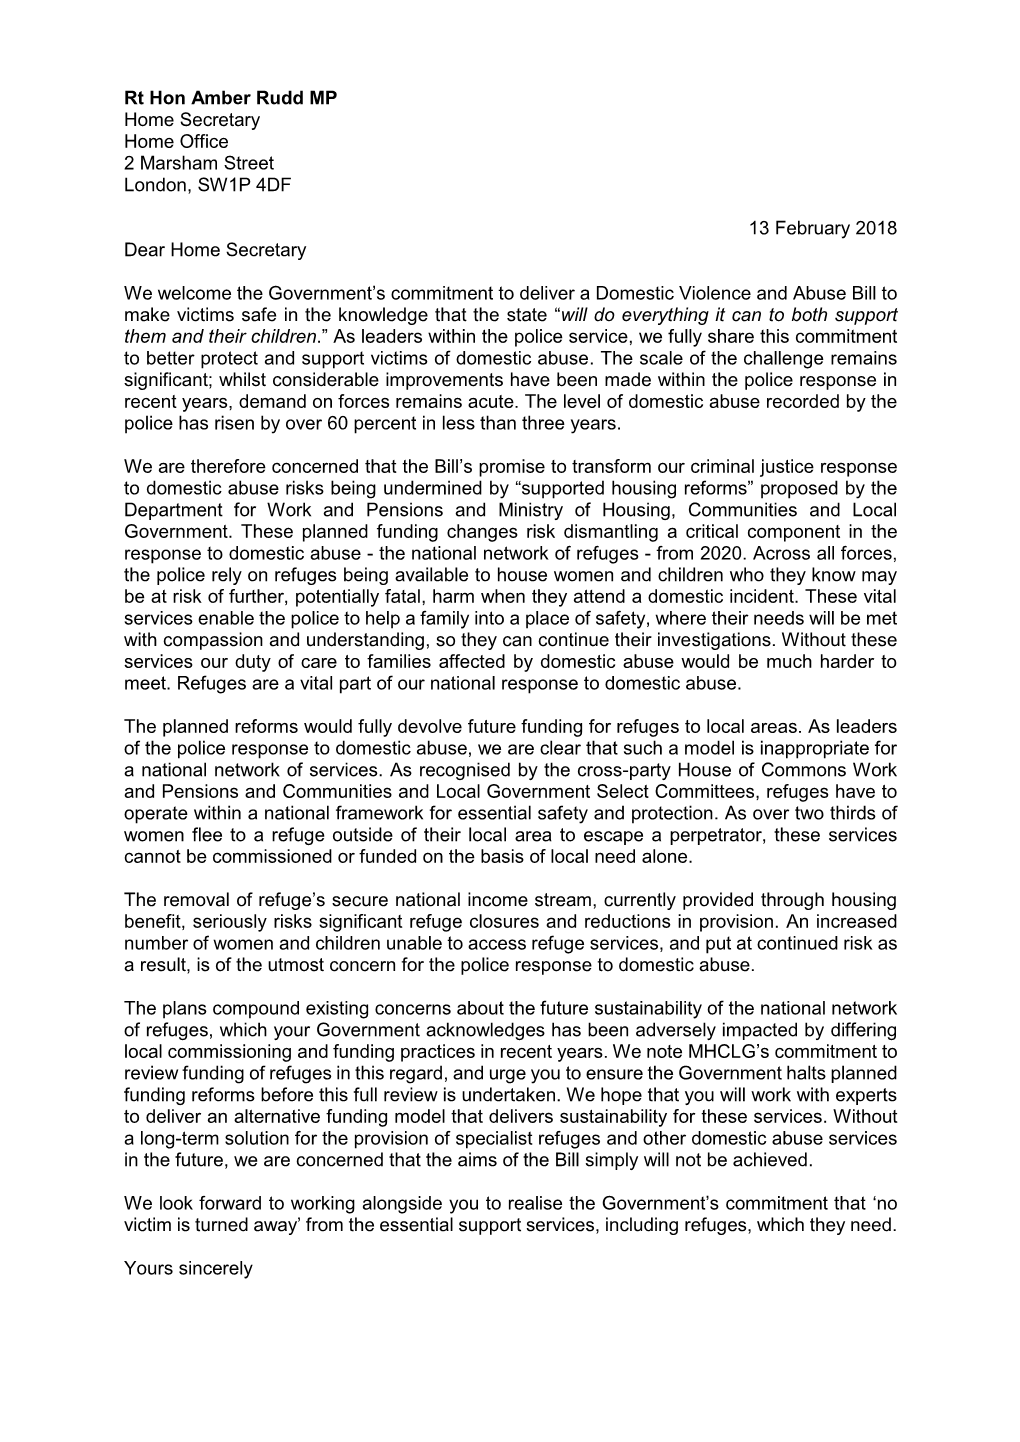 Letter to the Home Secretary Regarding Refuge Provision